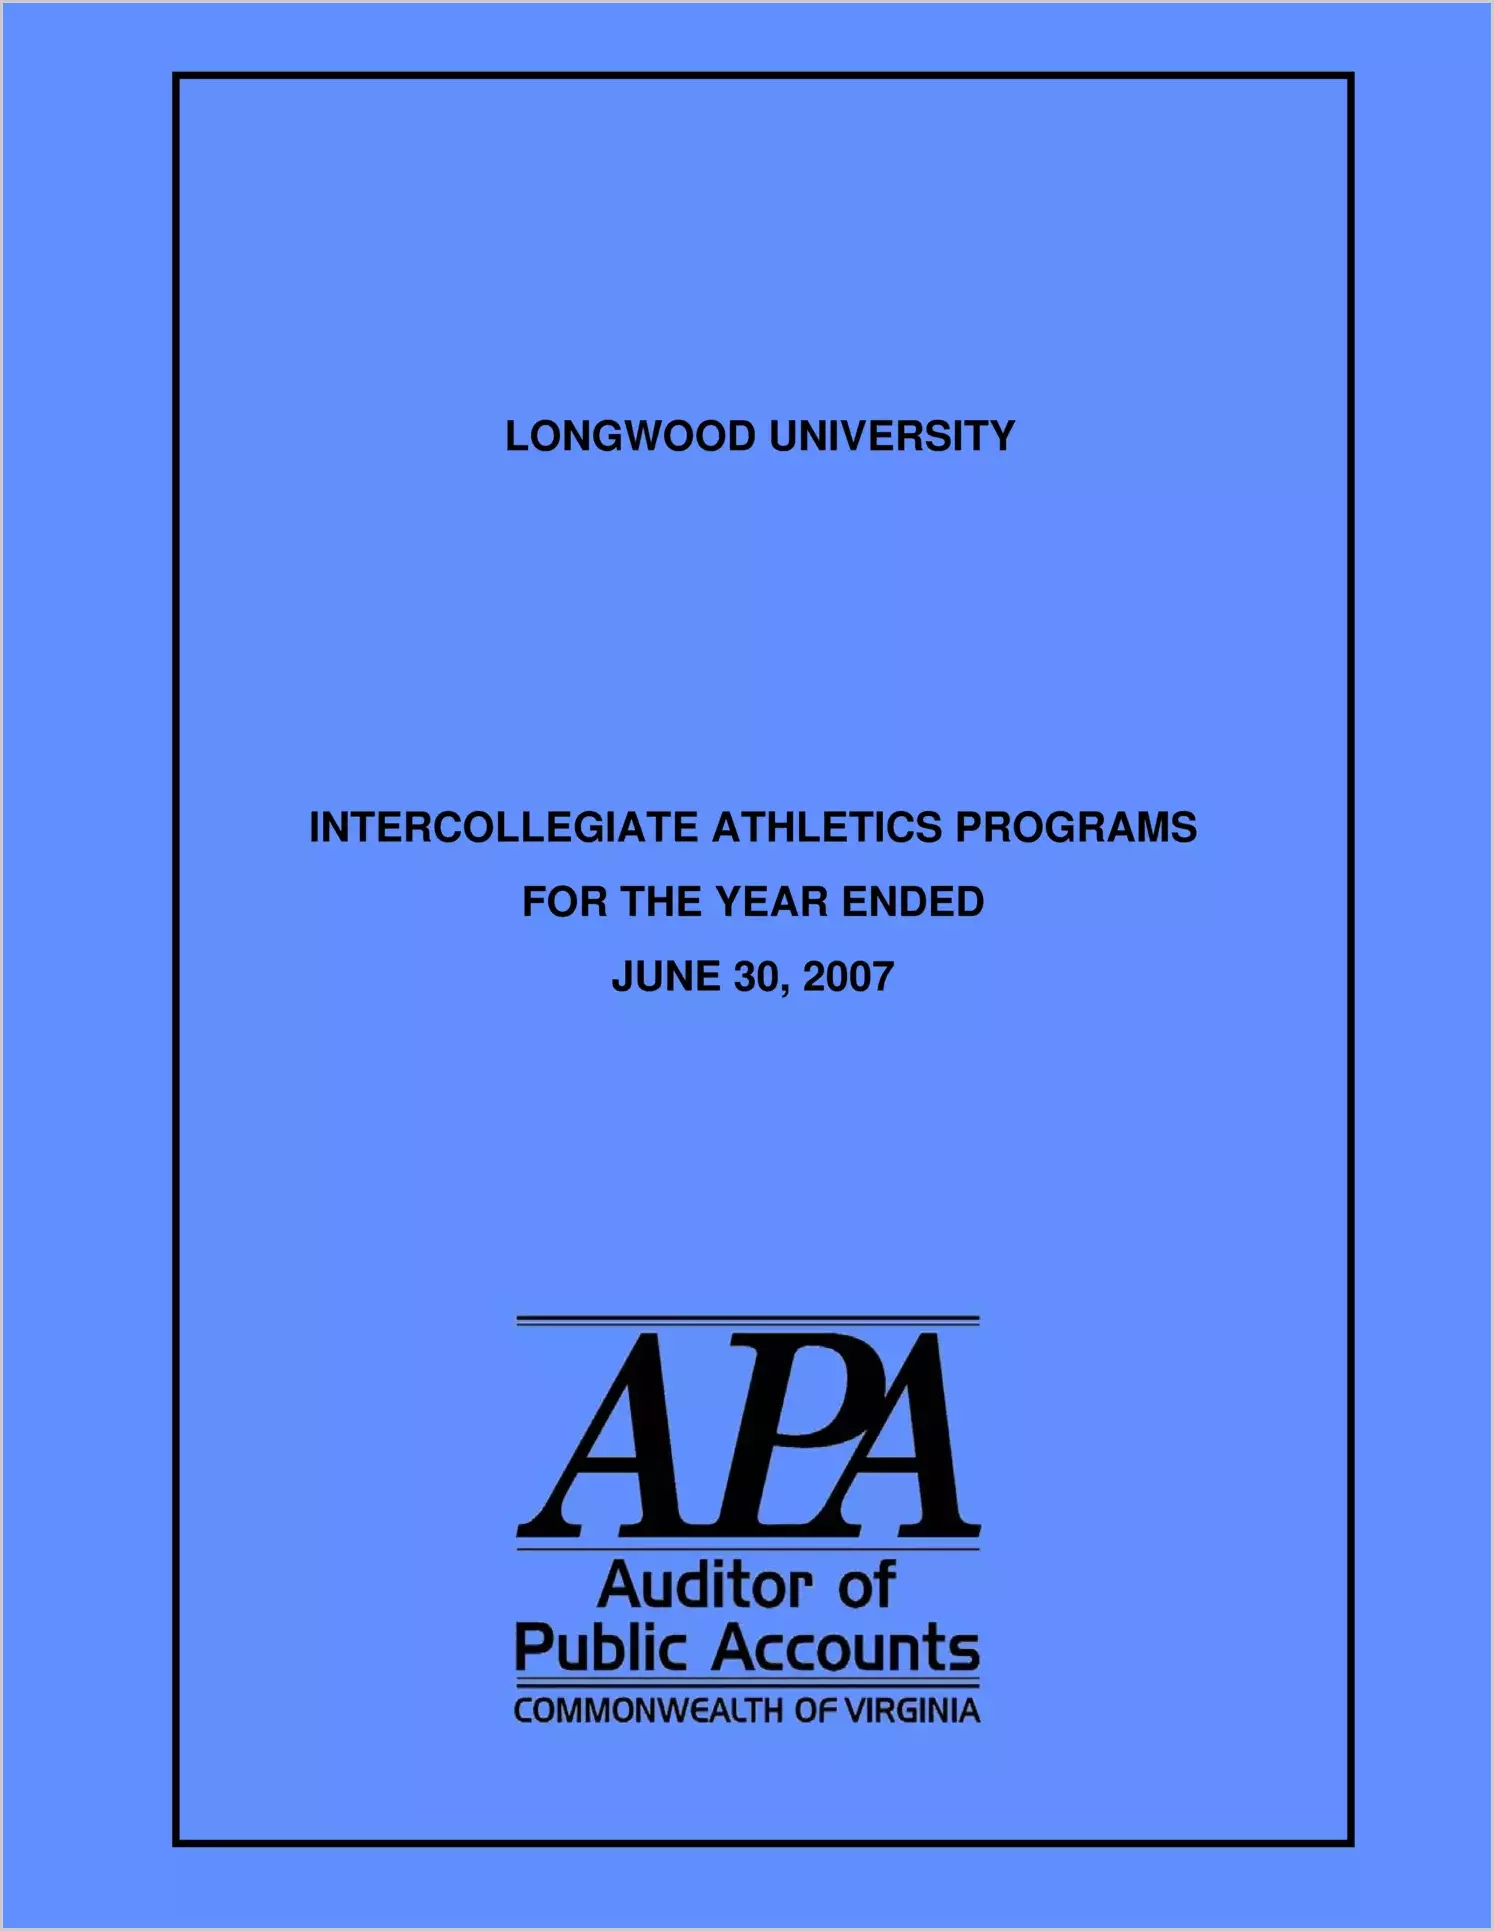 Longwood University Intercollegiate Athletics Programs for the year ended June 30, 2007